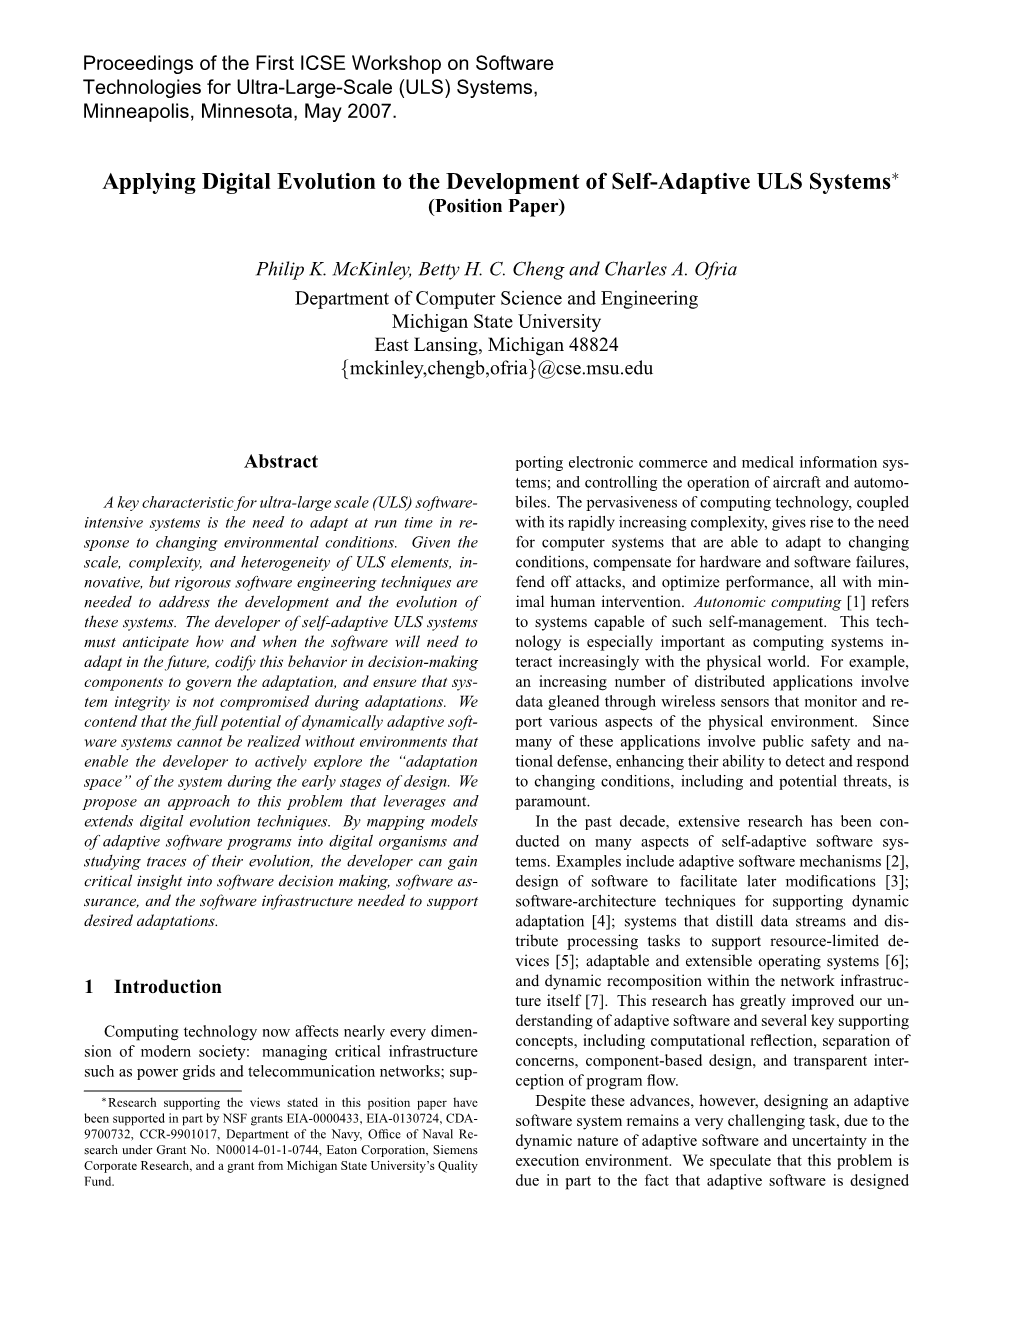 Applying Digital Evolution to the Design of Self-Adaptive ULS Systems